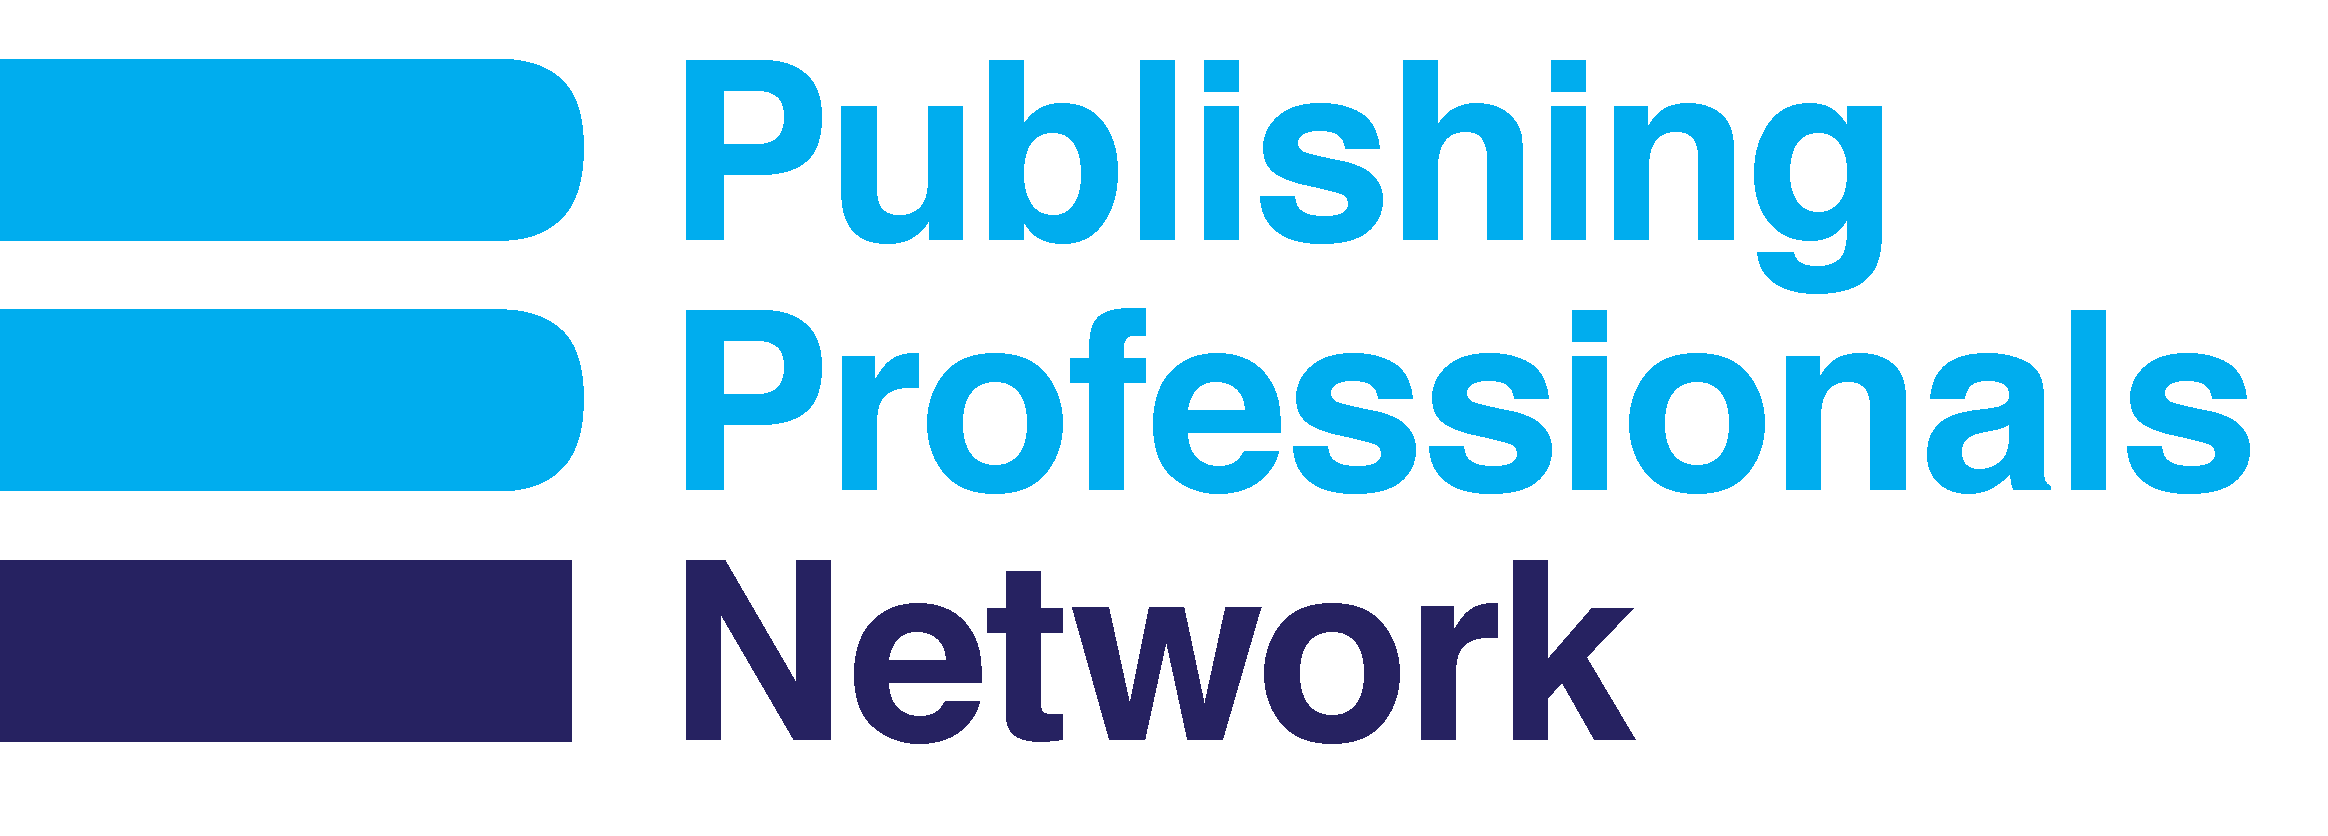 Publishing Professionals Network